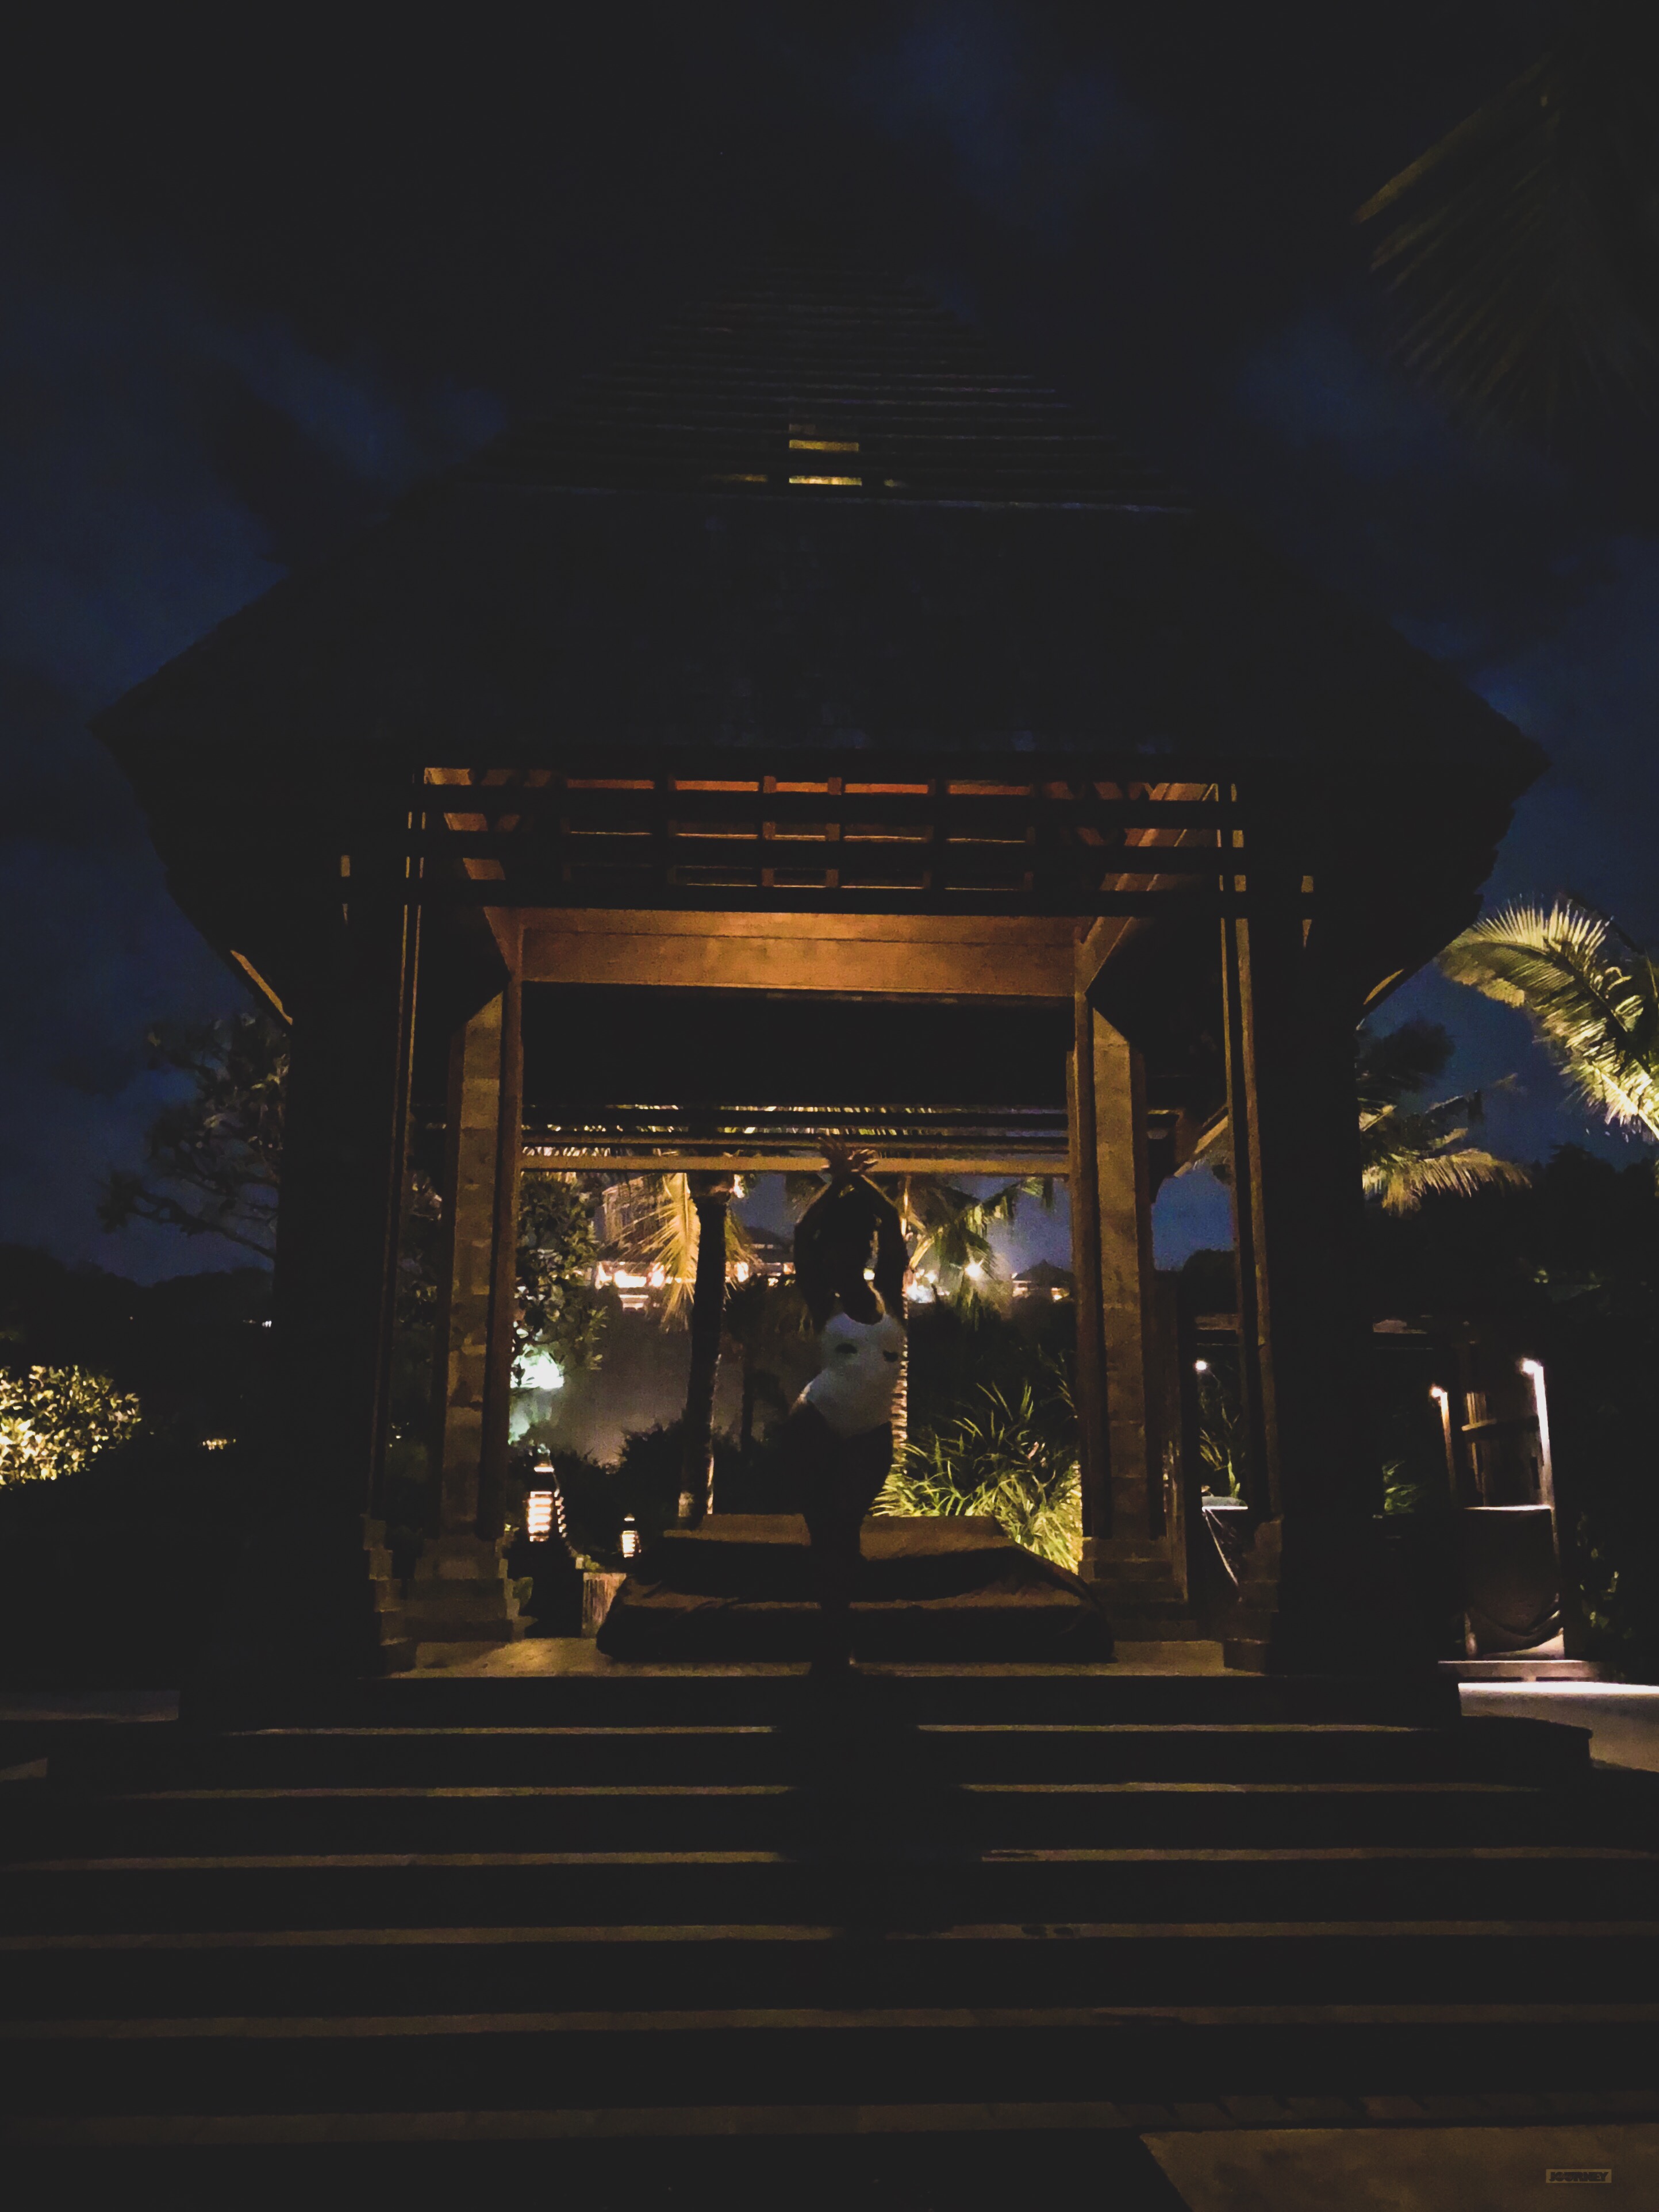 The Ritz-Carlton, Bali